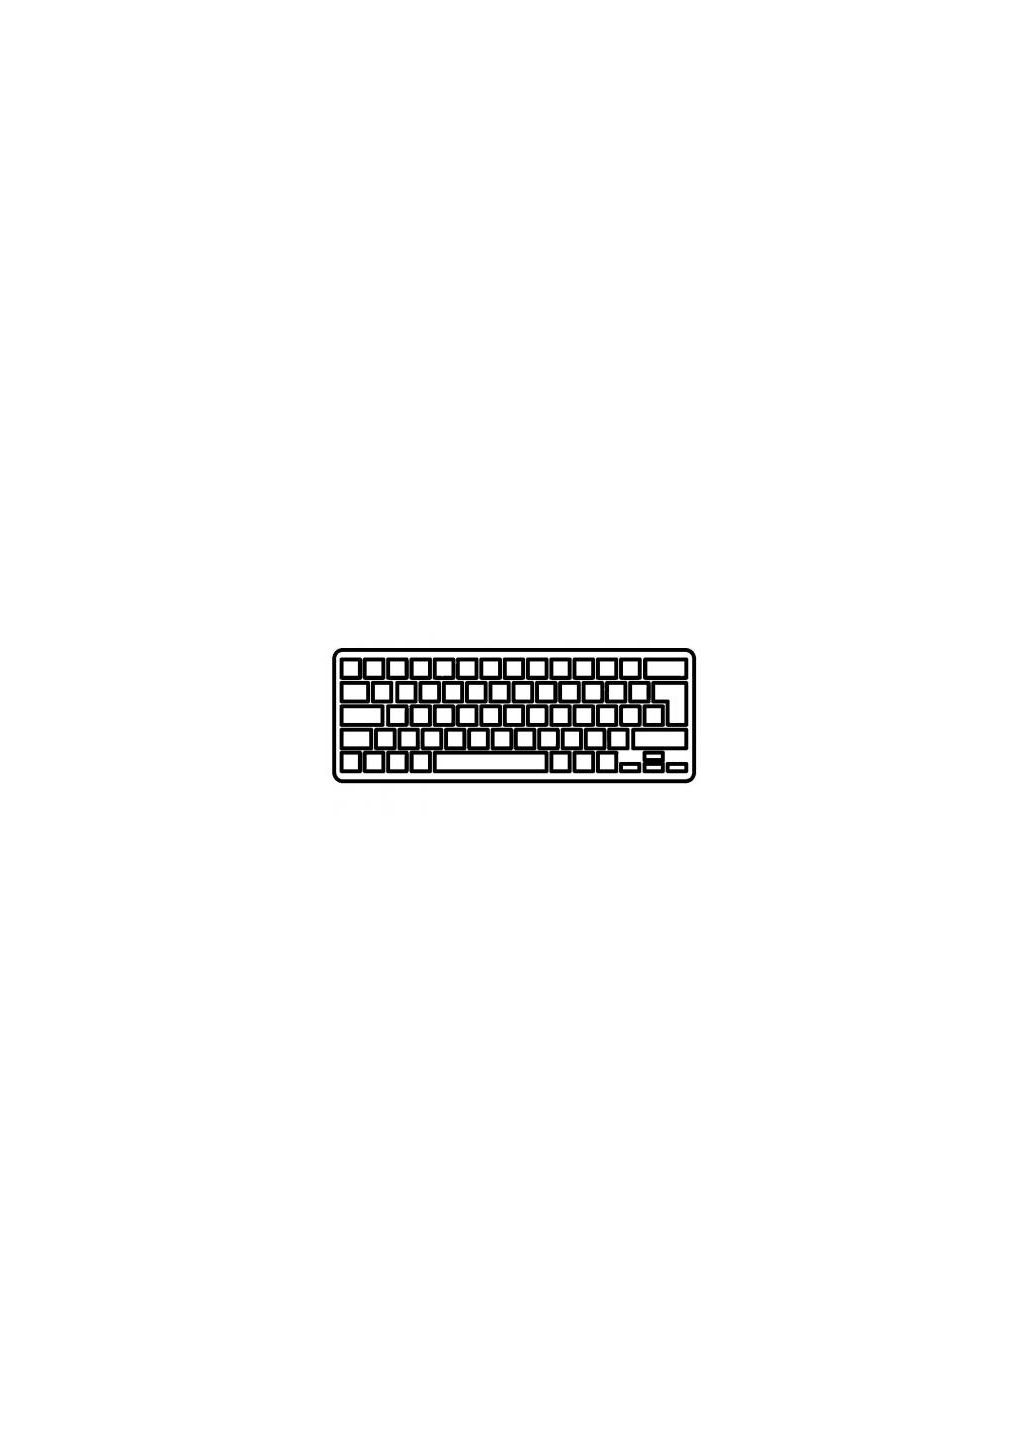 Клавиатура ноутбука Pavilion dv45000 черная без рамки UA (A43707) HP pavilion dv4-5000 черная без рамки ua (276706708)